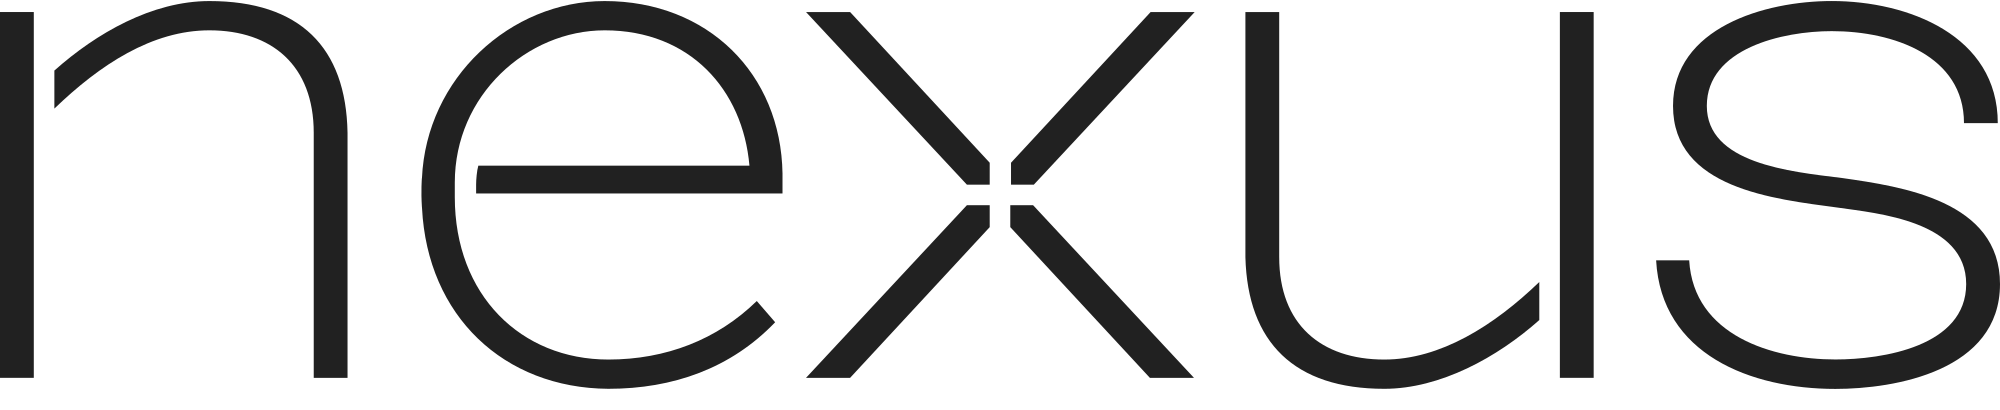 Nexus Logo - Nexus logo 2015.svg